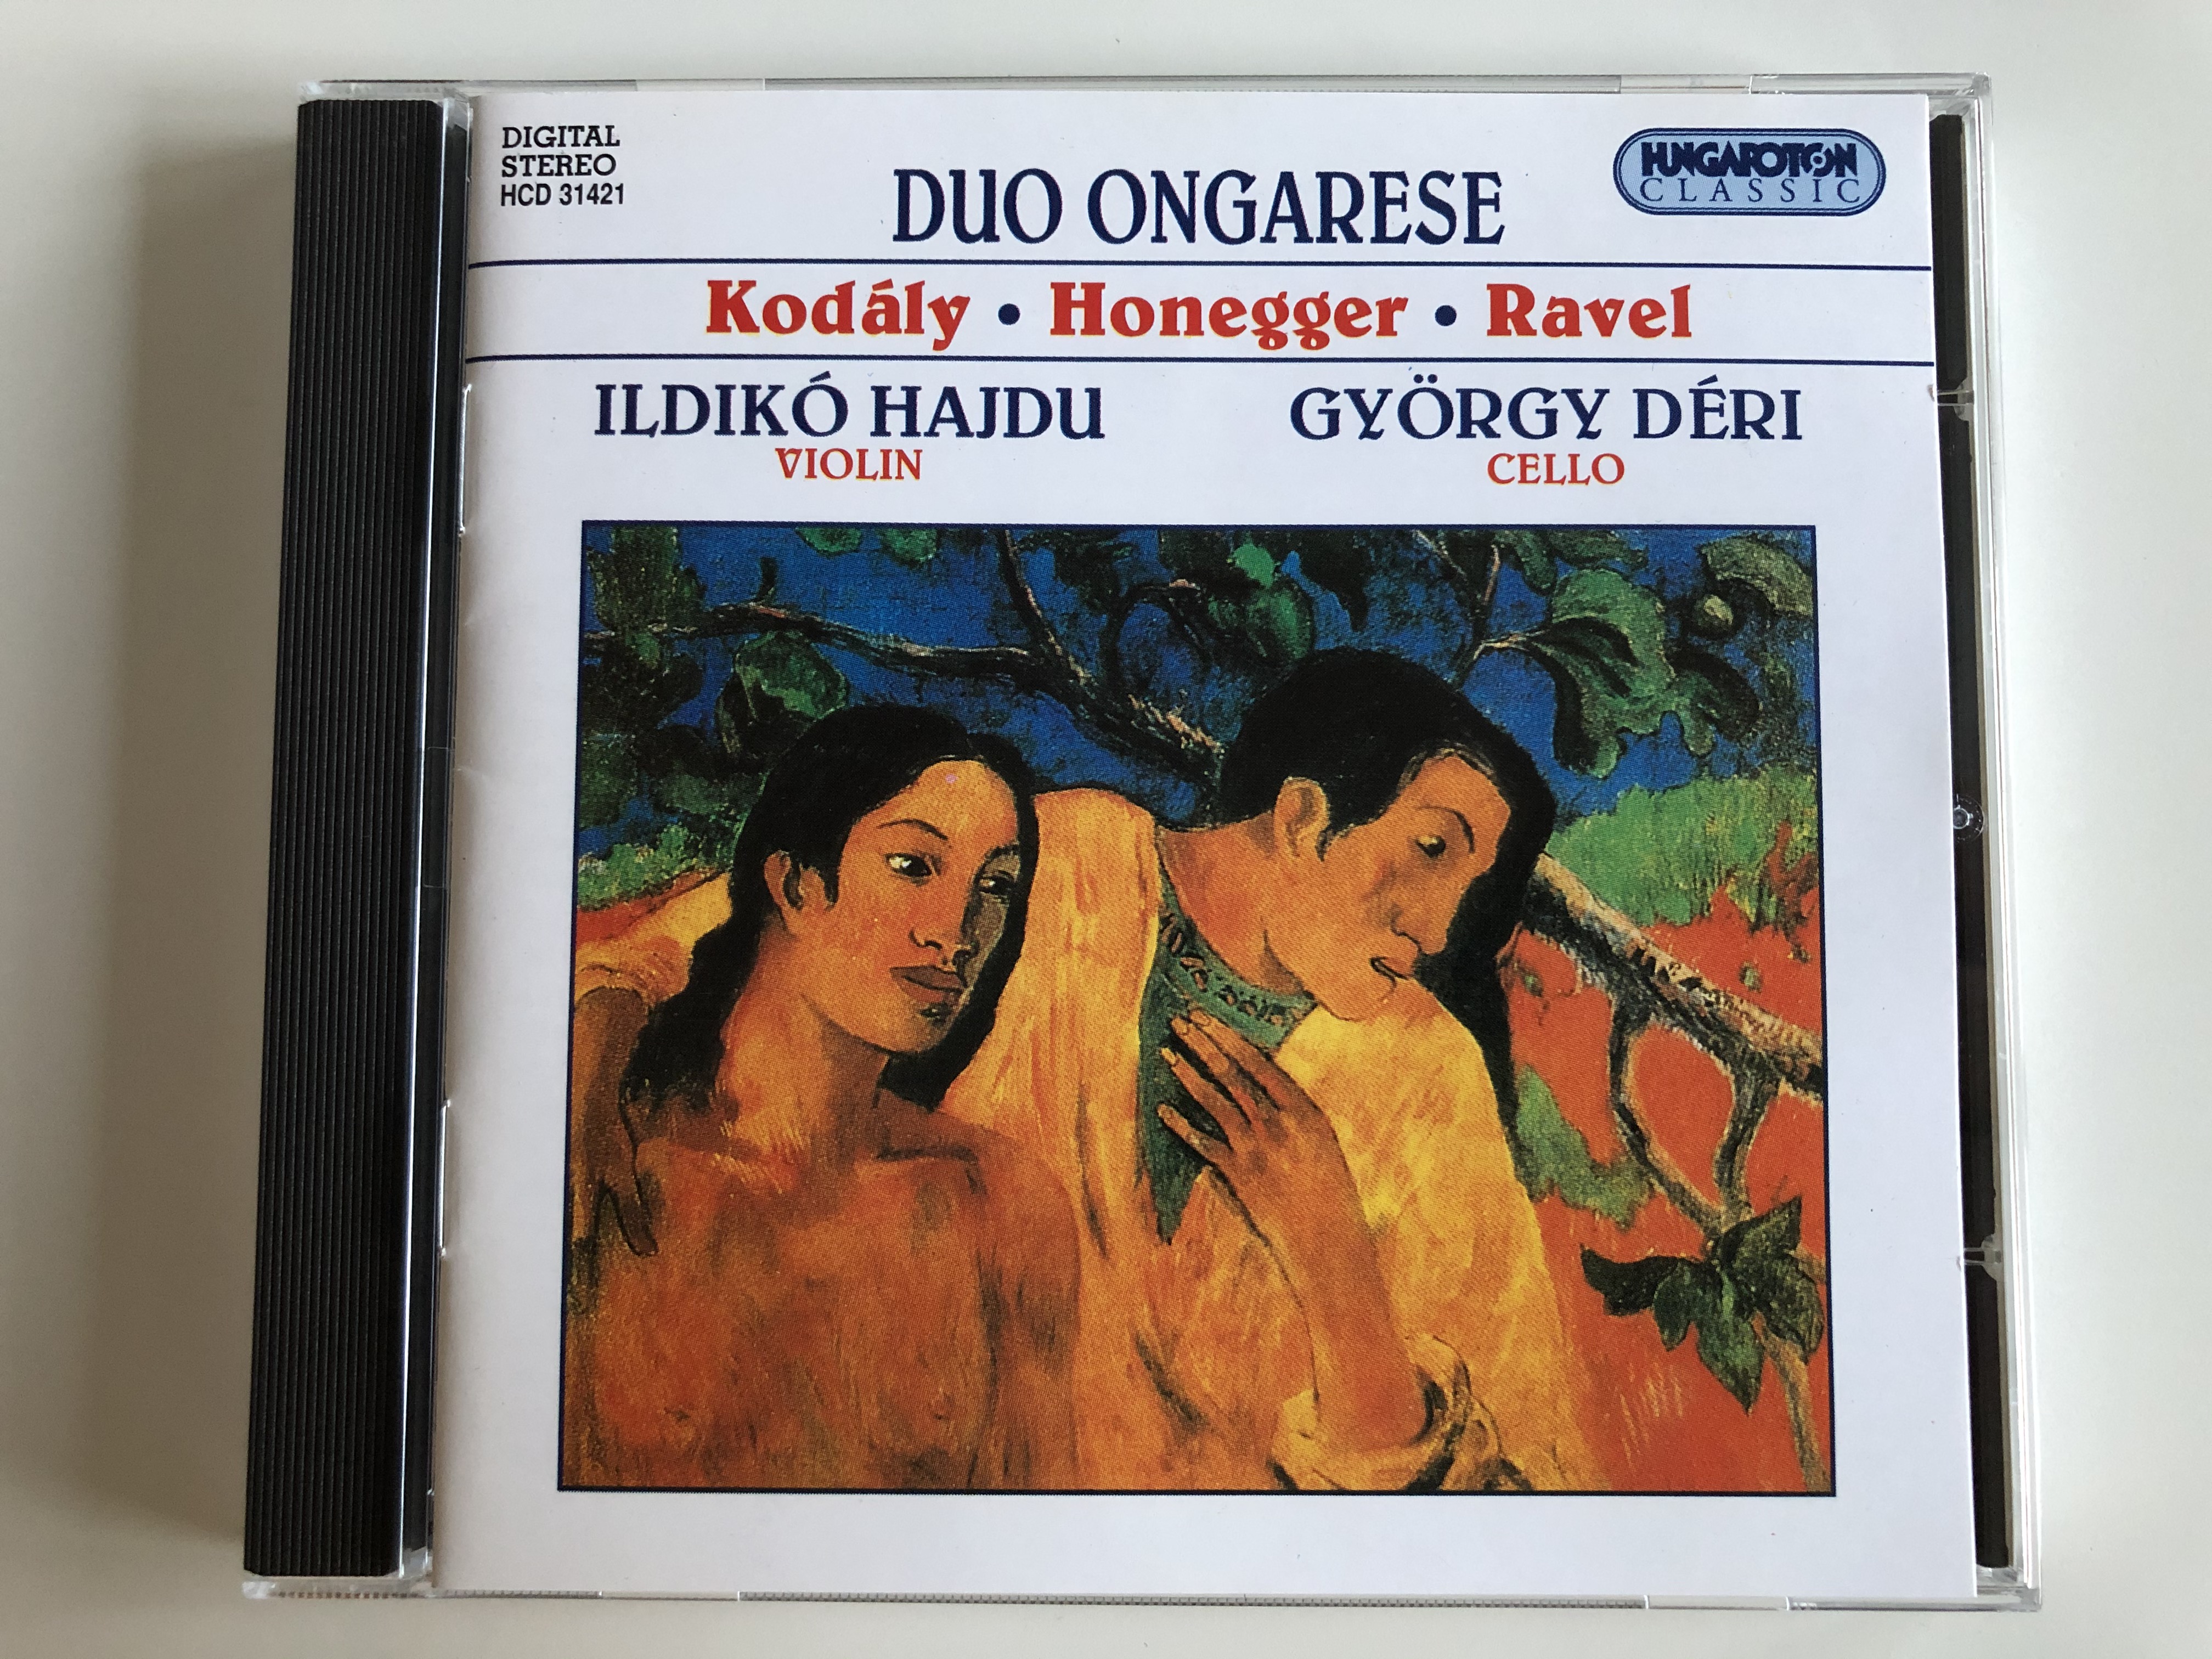 duo-ongarese-kod-ly-honegger-ravel-ildik-hajdu-violin-gy-rgy-d-ri-cello-hungaroton-classic-audio-cd-1995-stereo-hcd-31421-1-.jpg